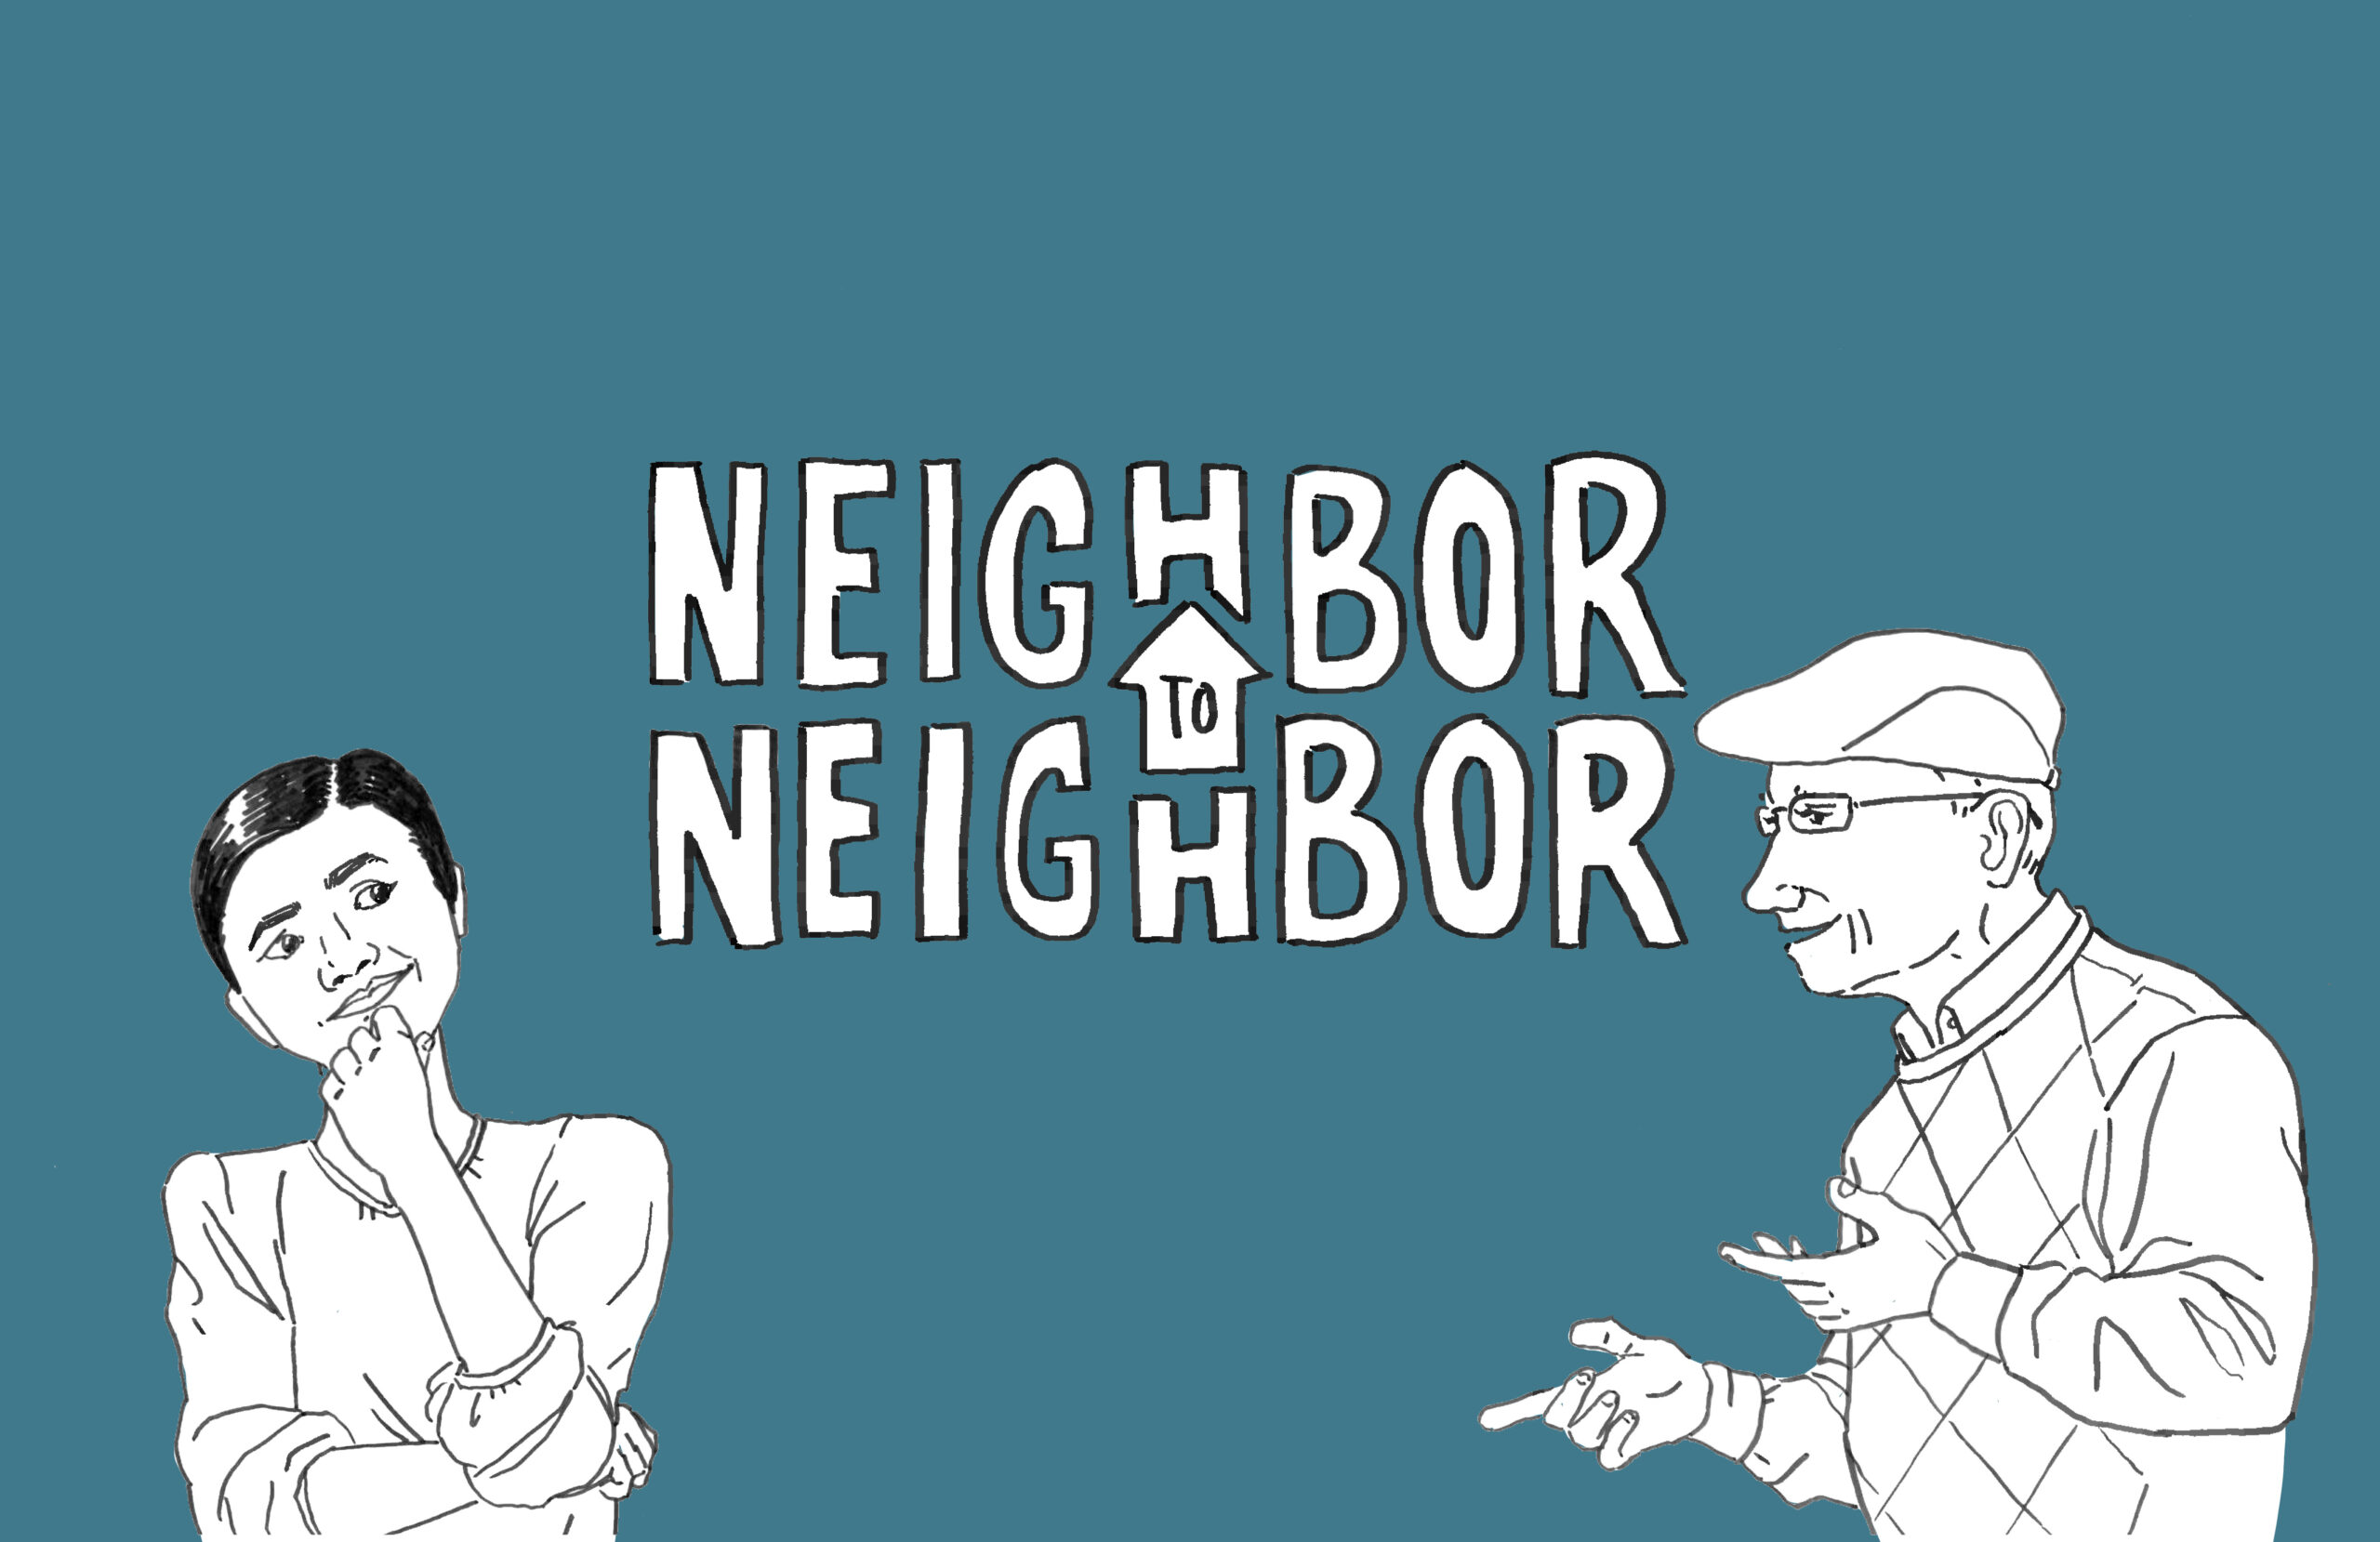 Neighbor to Neighbor illustration with logo